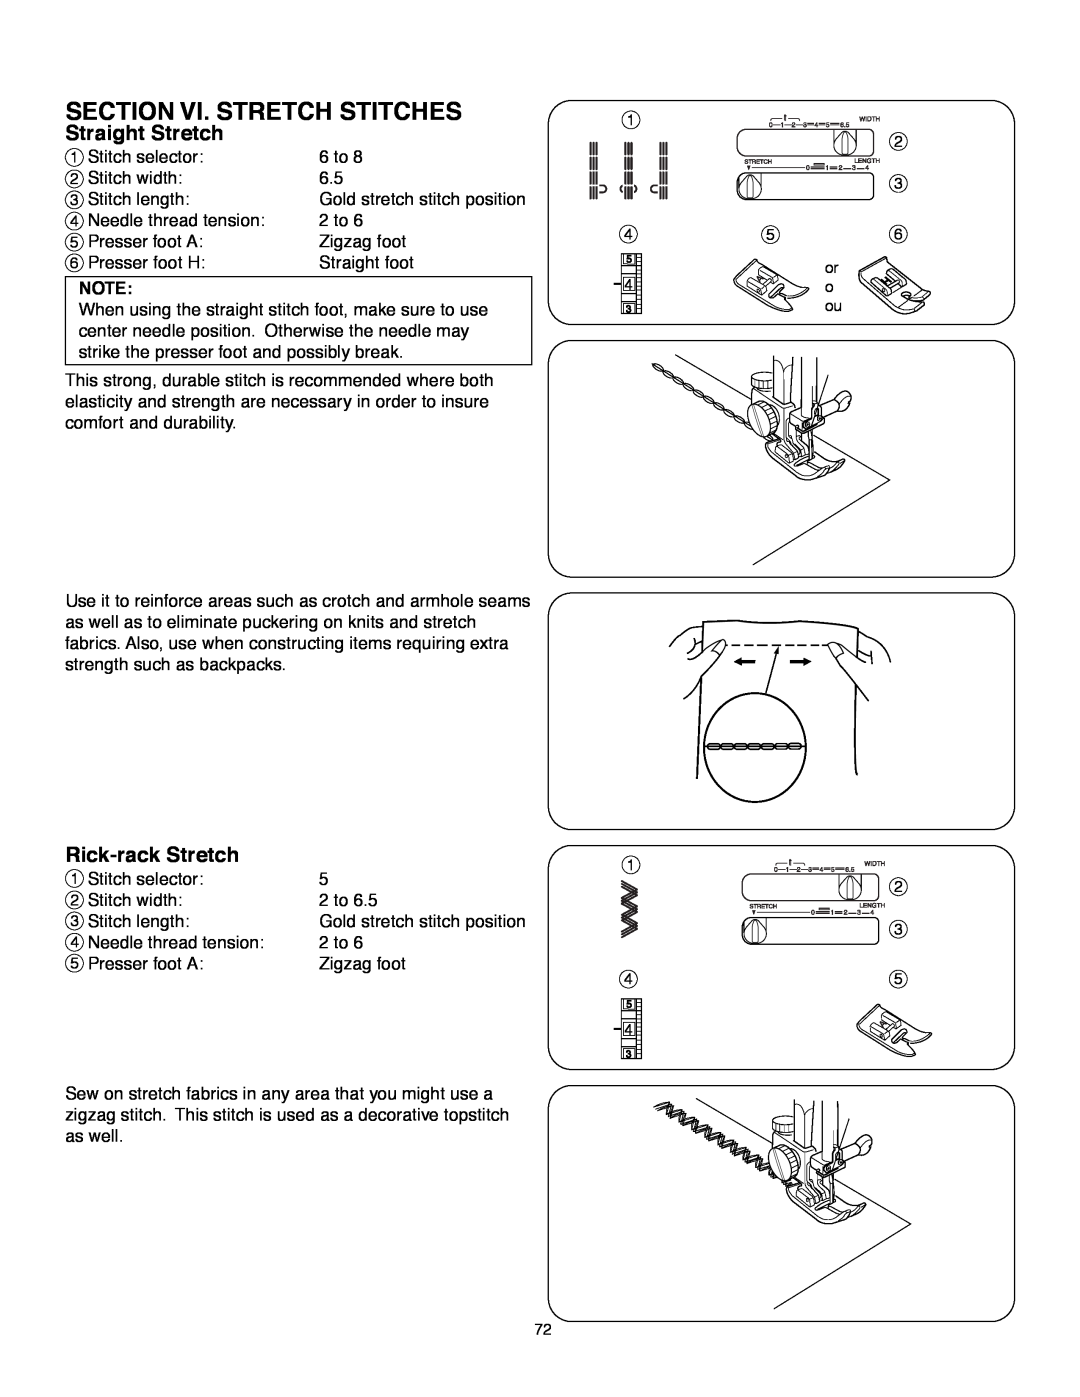 Janome MS-5027 instruction manual Section Vi. Stretch Stitches, Straight Stretch, Rick-rack Stretch 